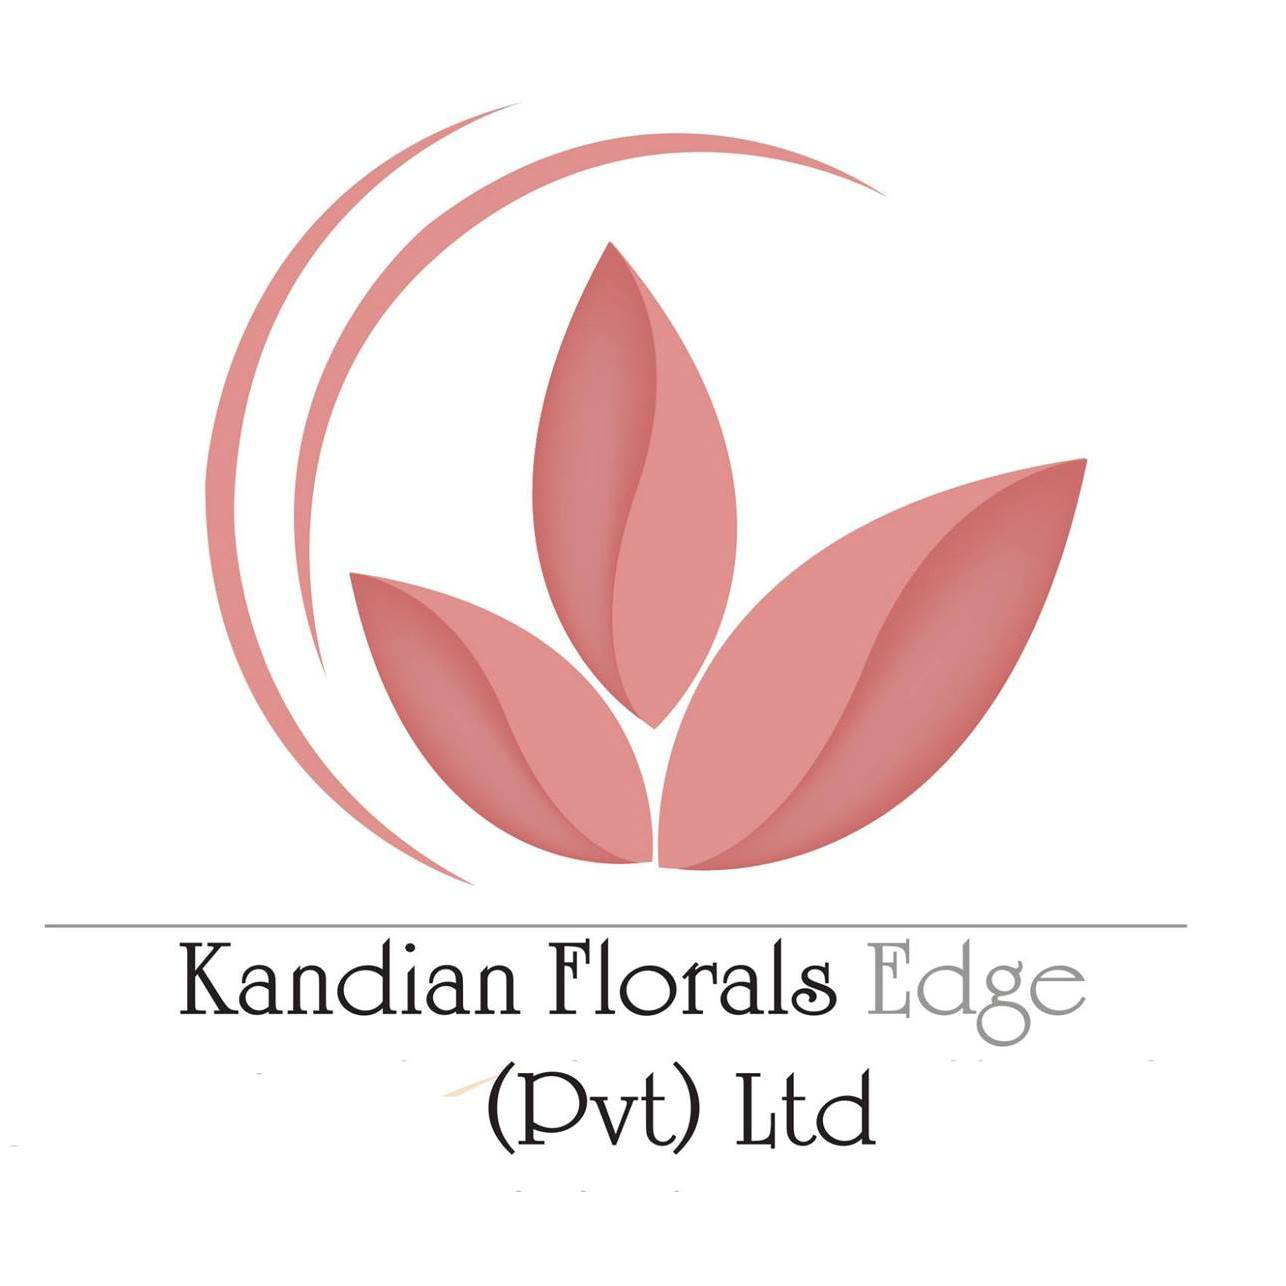 Kandian Florals Edge